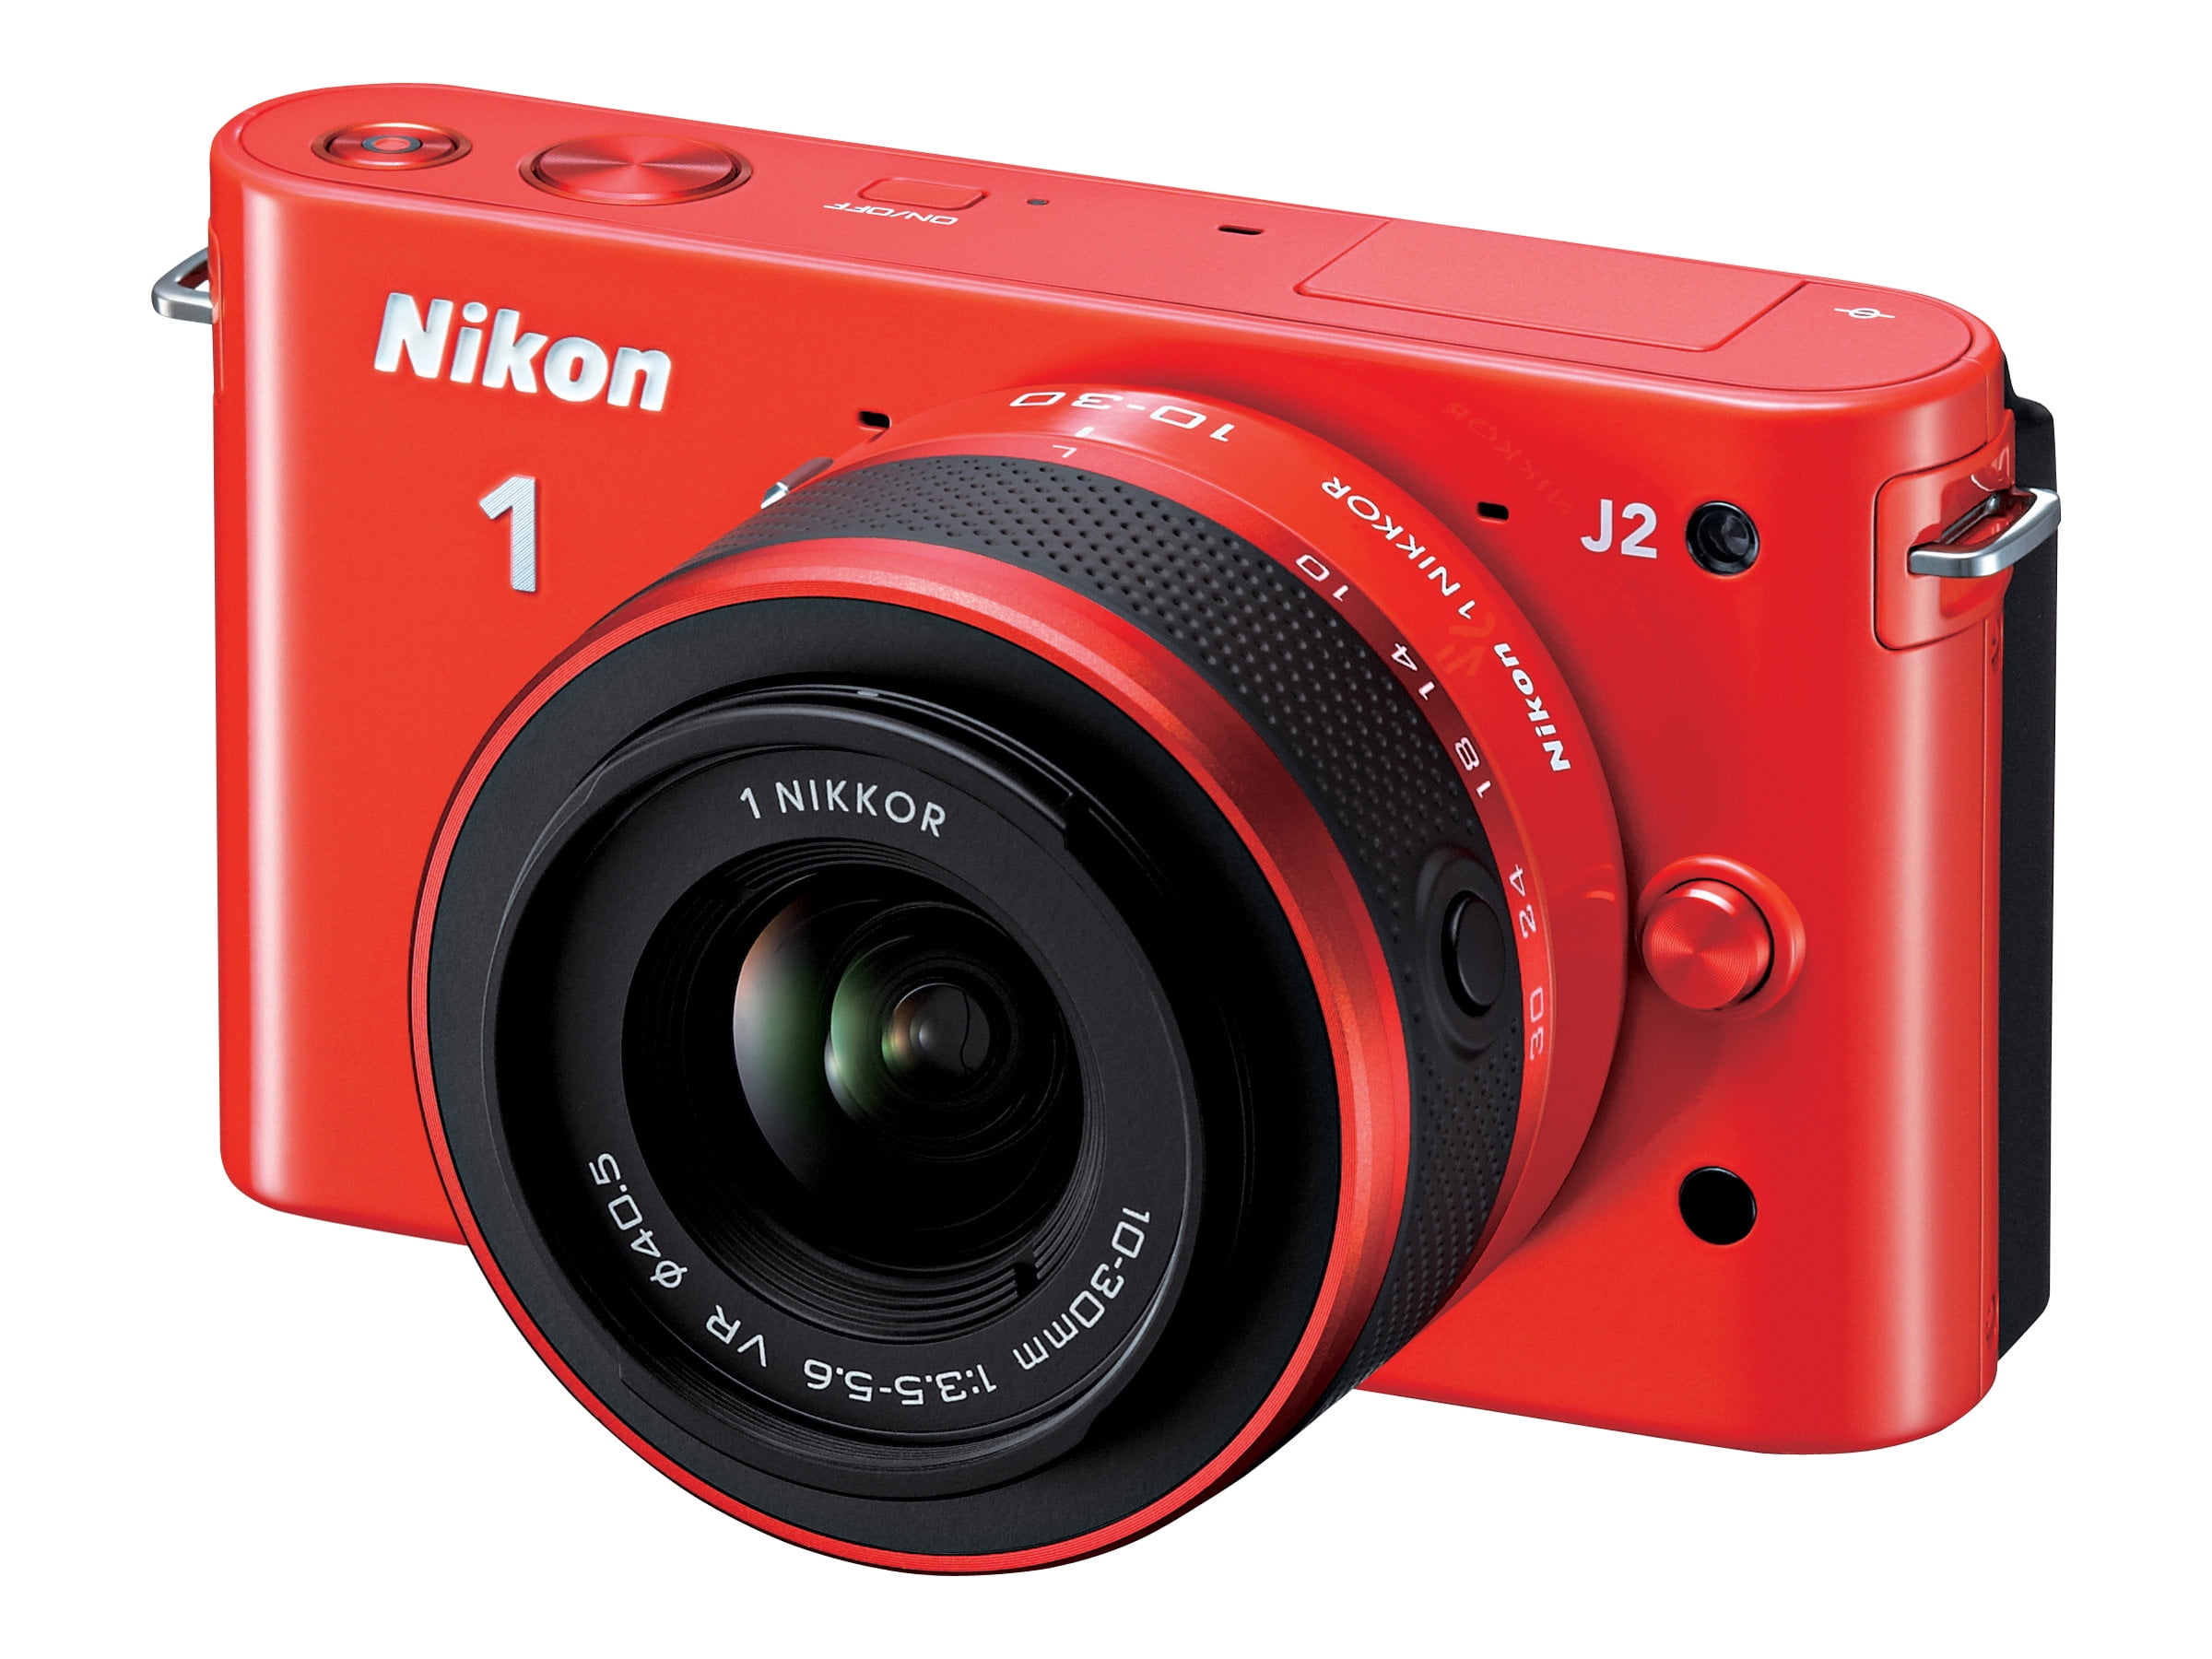 briefpapier hebzuchtig Impressionisme Nikon 1 J2 - Digital camera - mirrorless - 10.1 MP - 3x optical zoom 1  NIKKOR VR 10-30mm and 30-110mm lenses - orange - Walmart.com